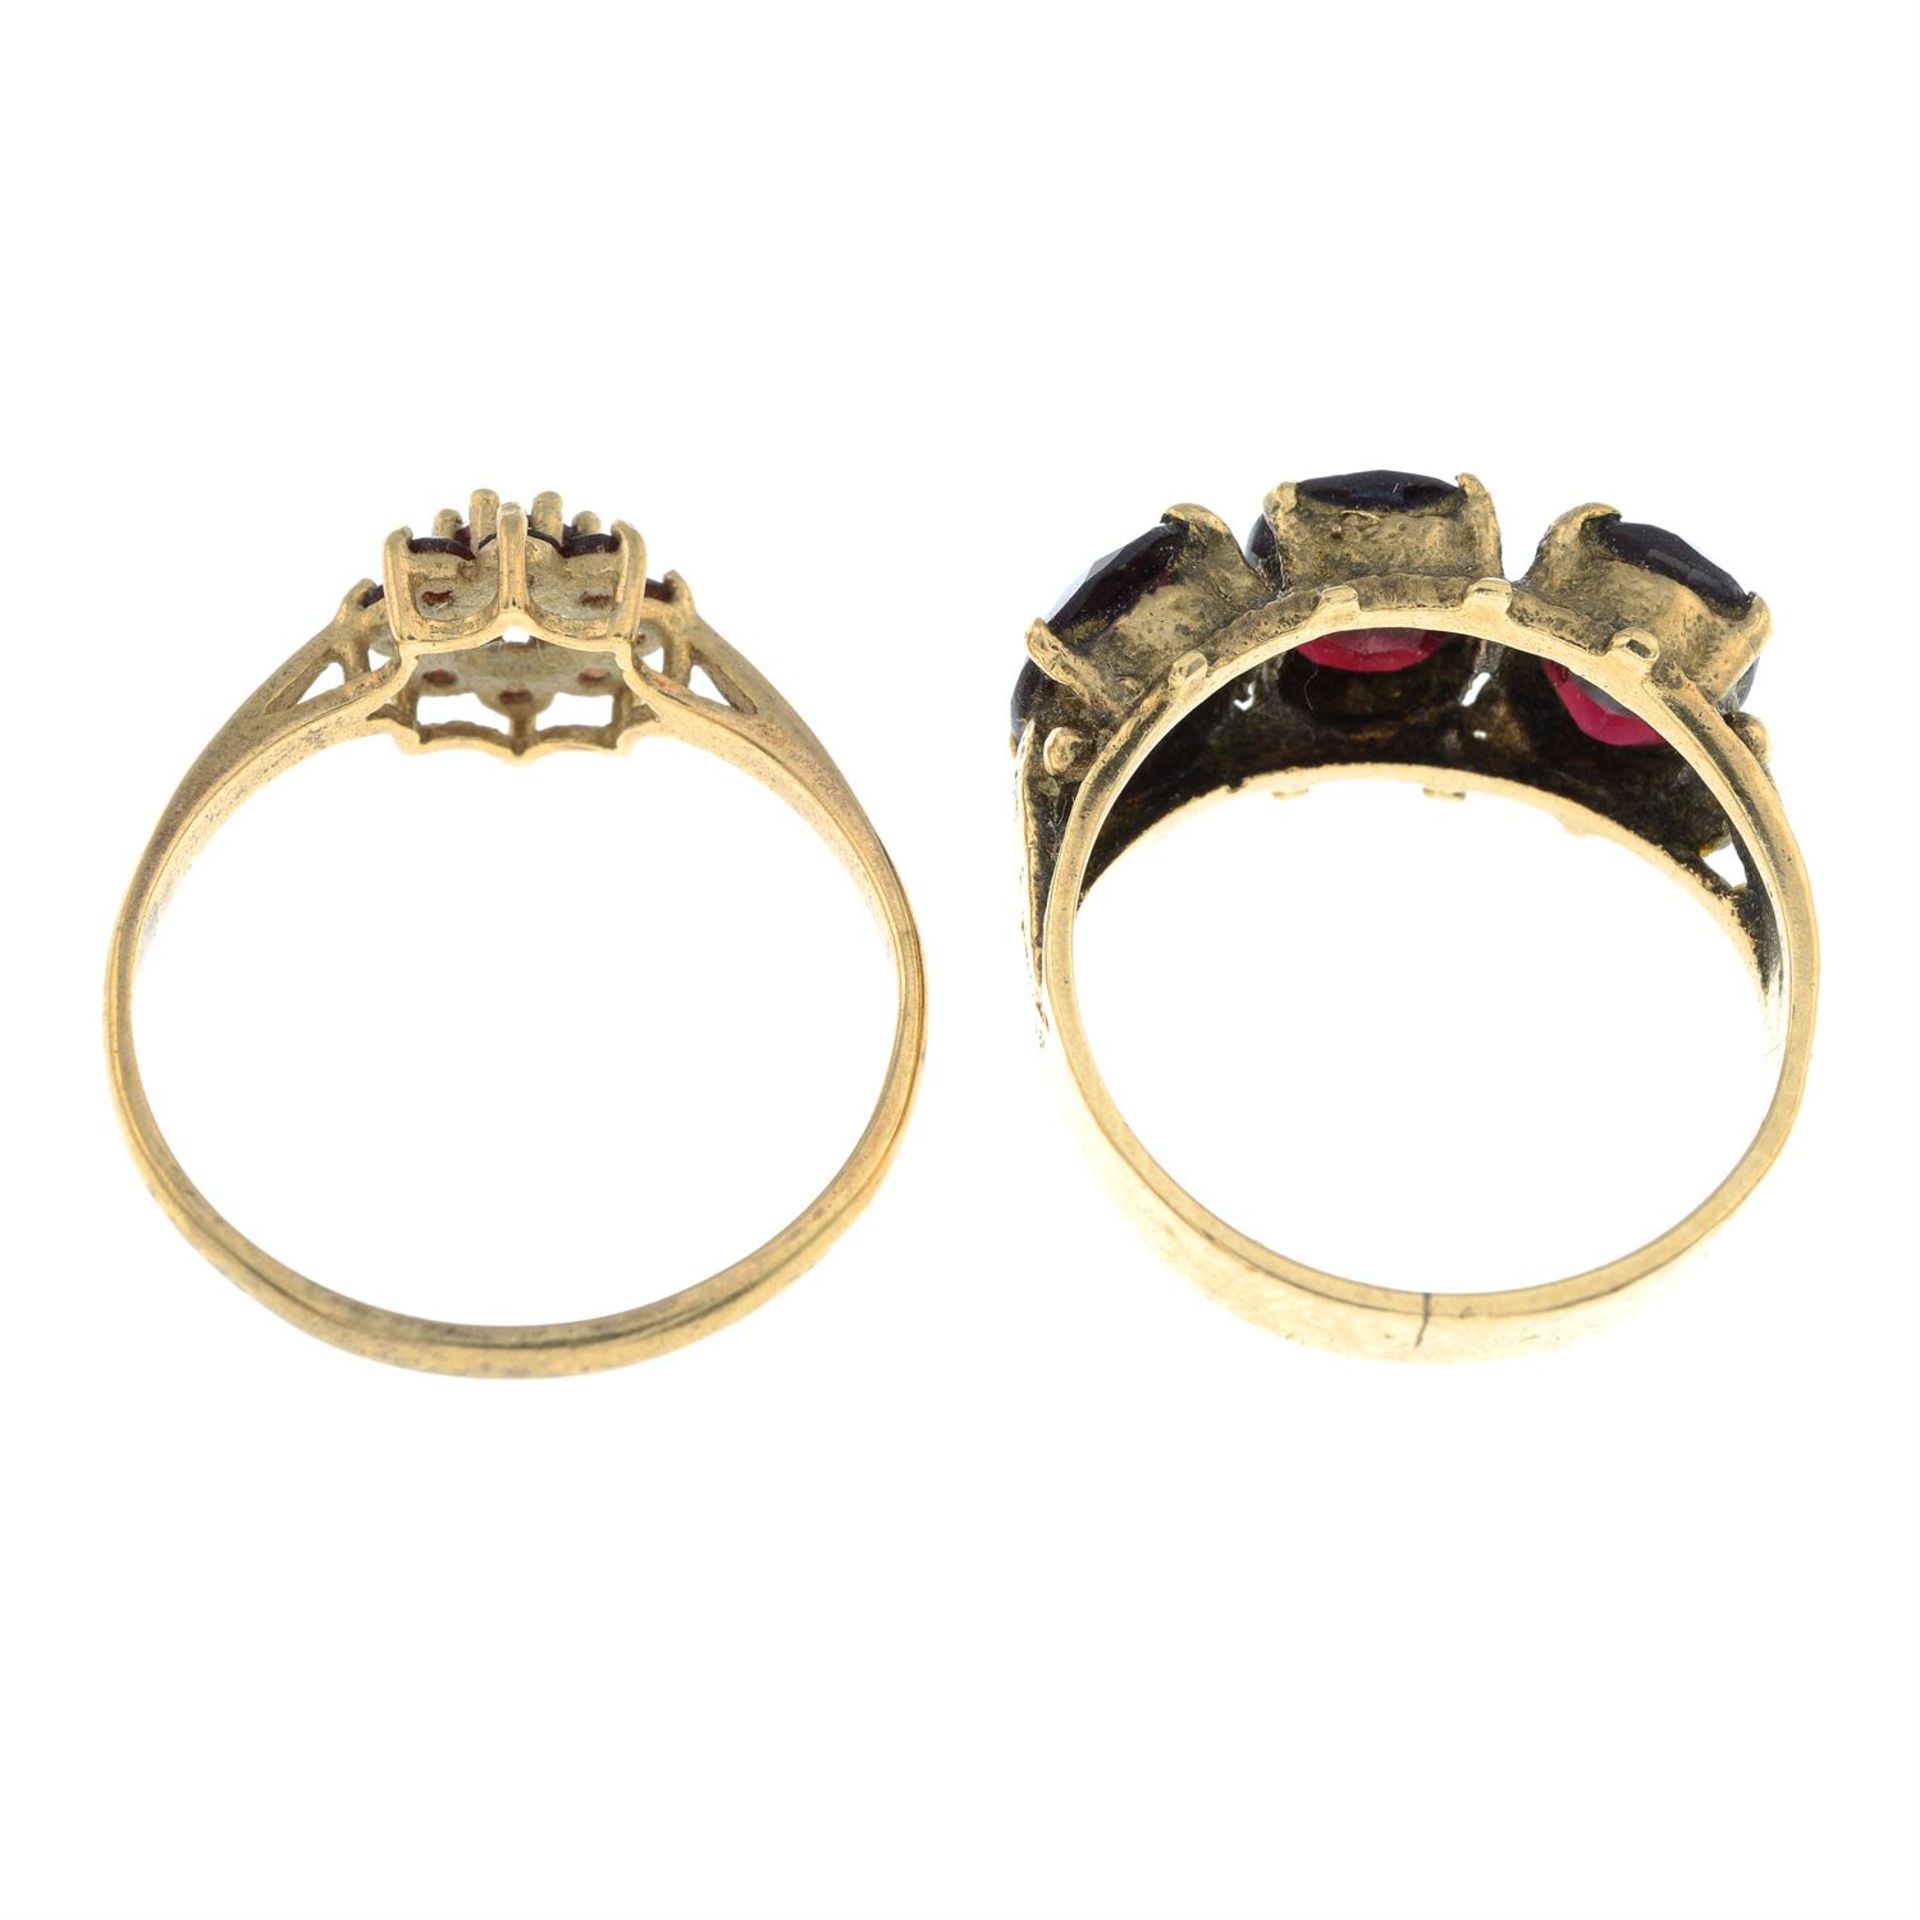 Two garnet rings. - Image 2 of 2